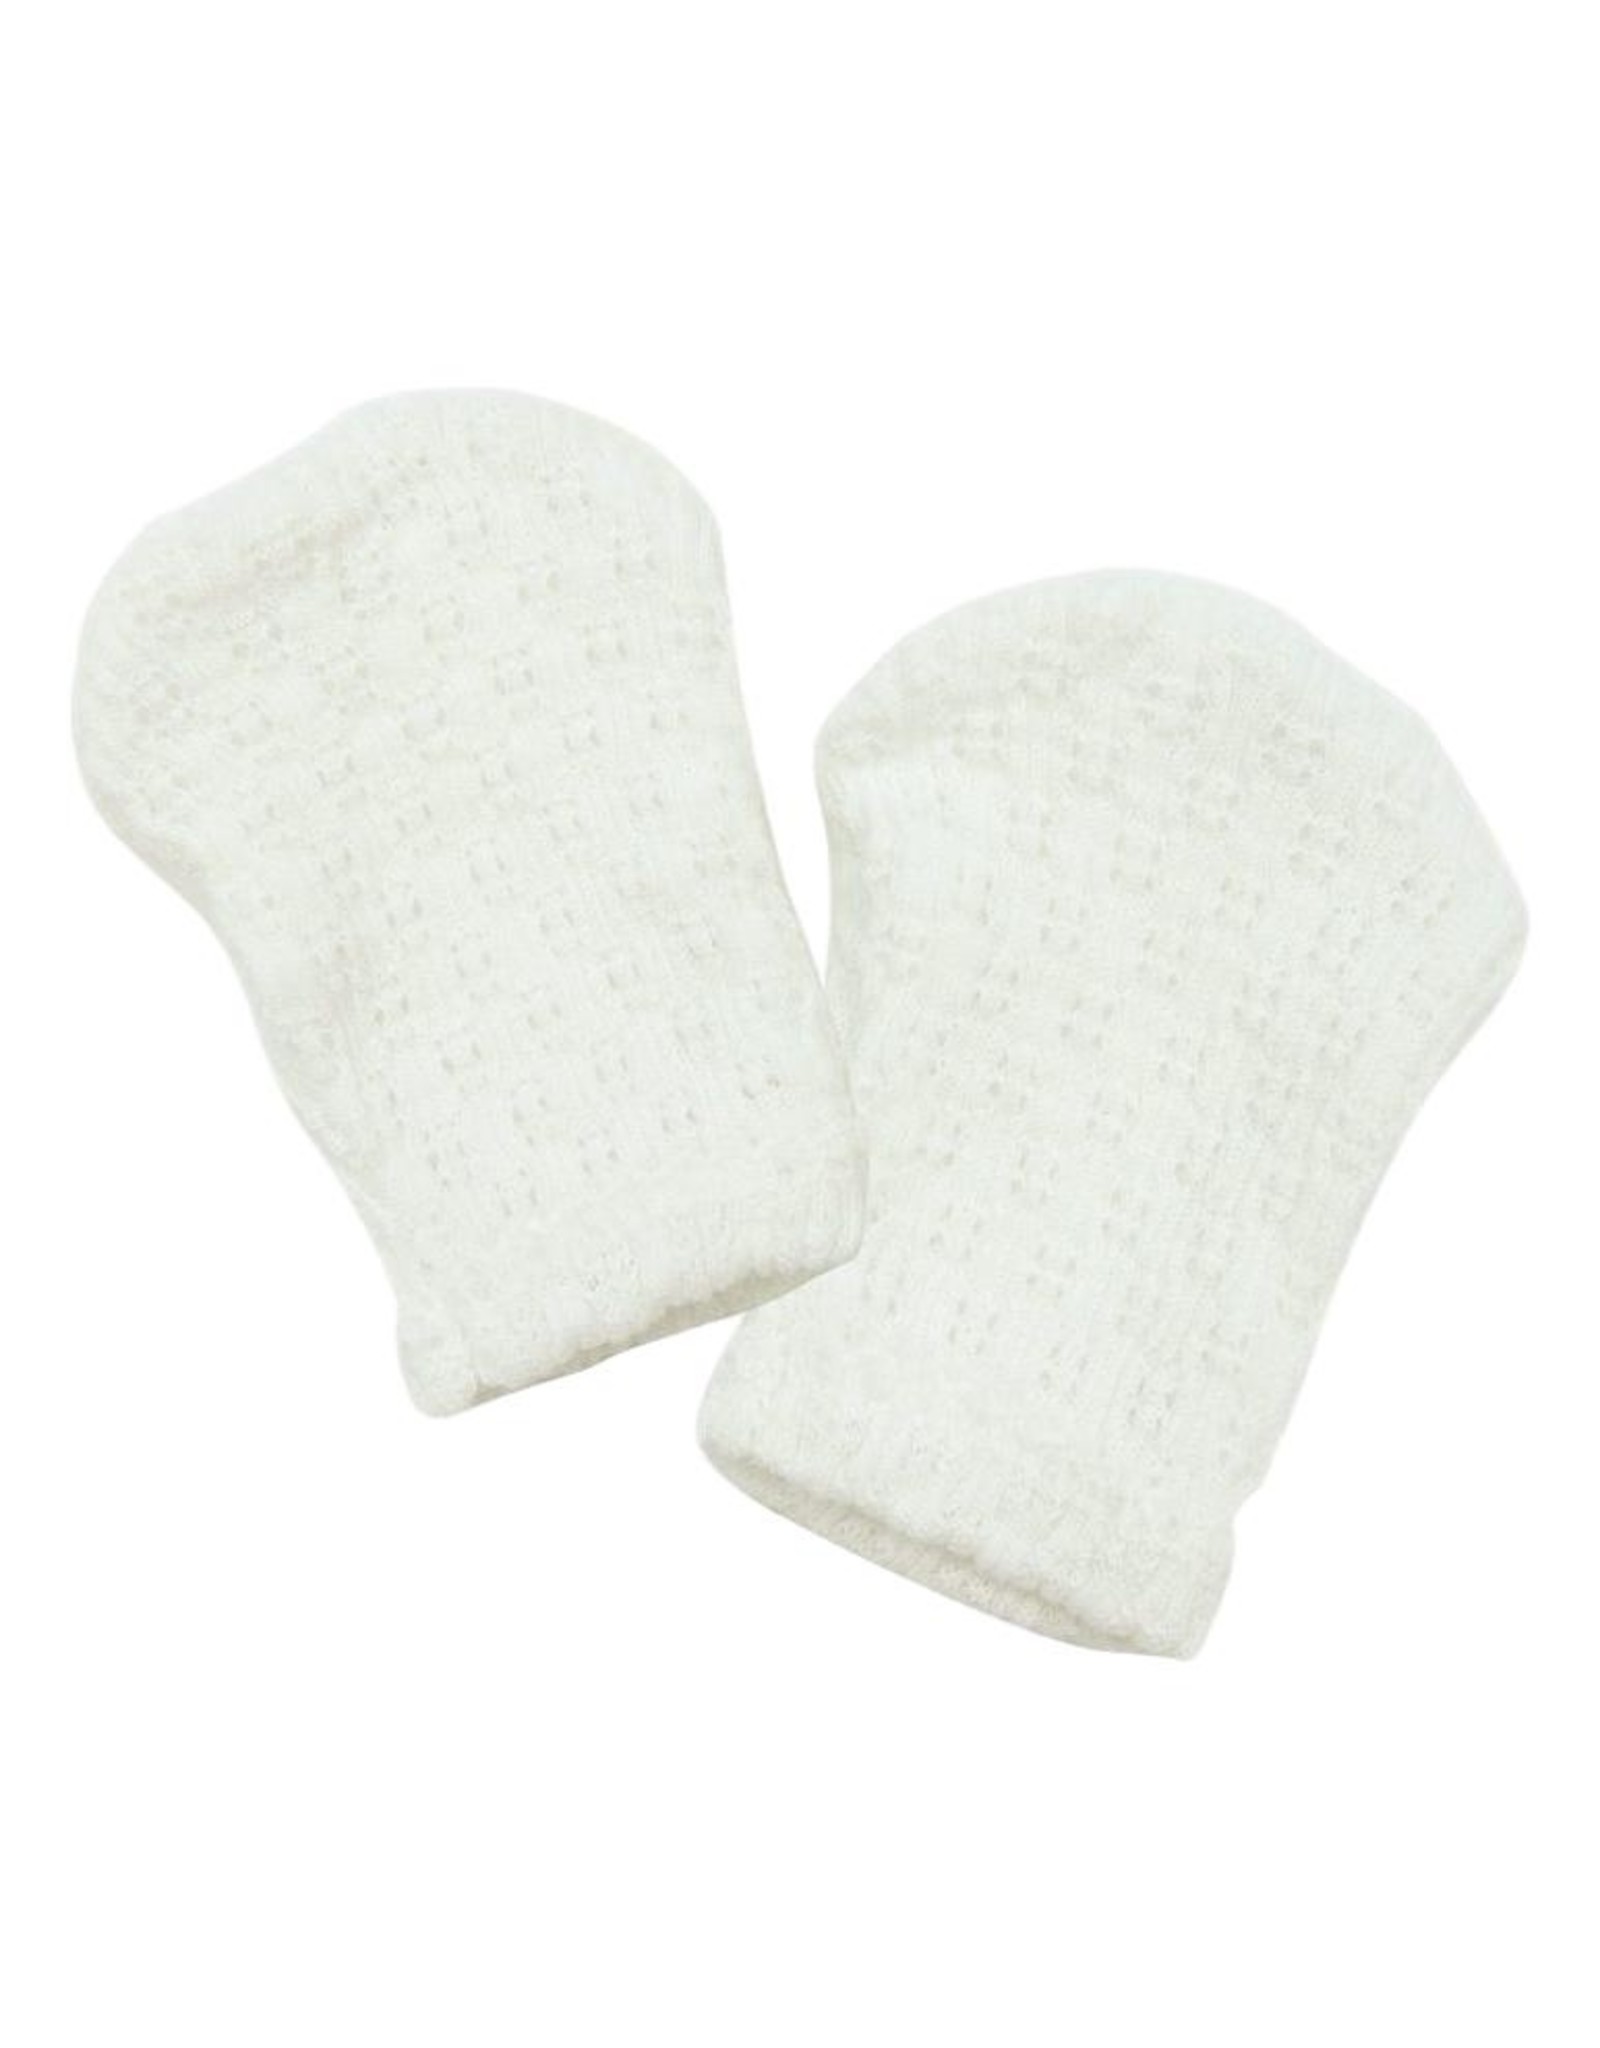 Paty, Inc. 188 mittens white